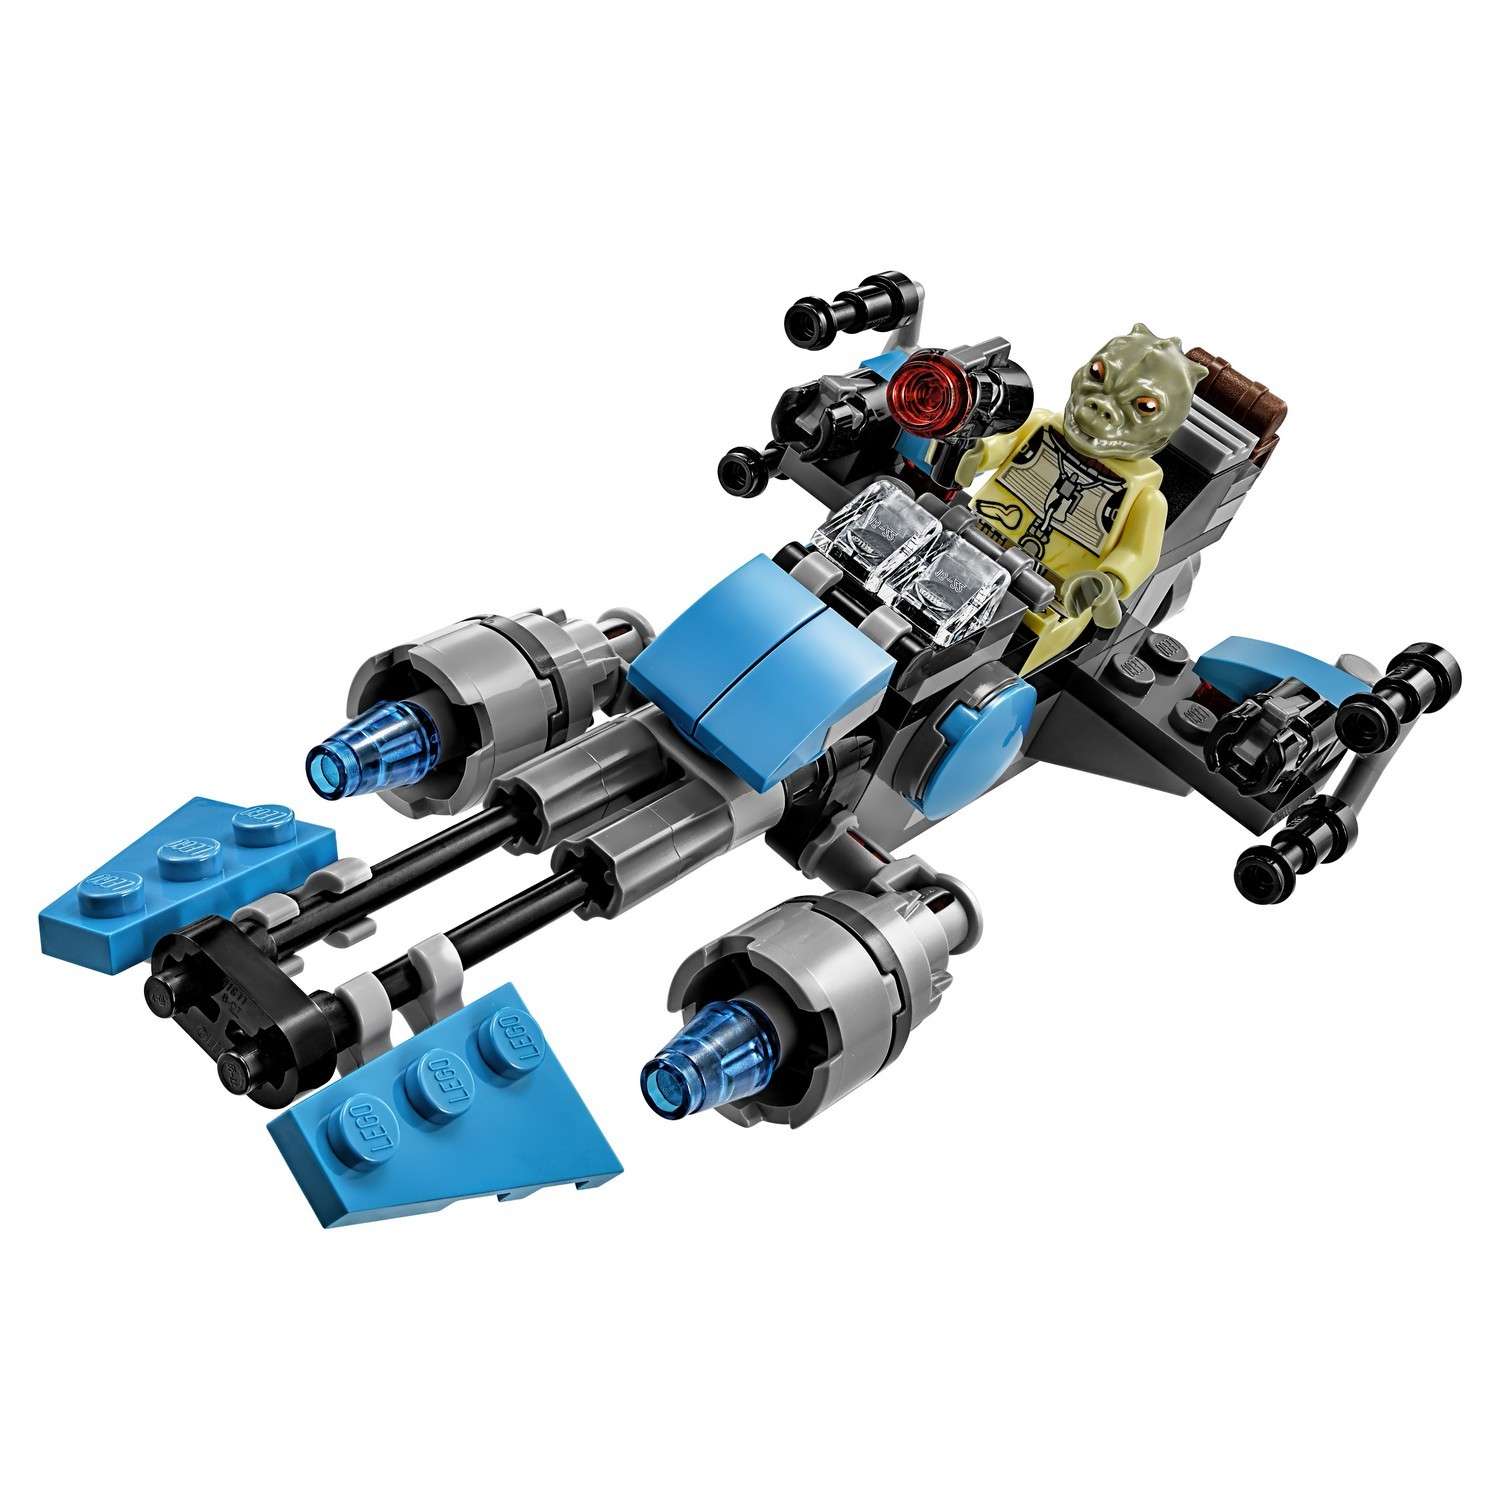 Конструктор LEGO Star Wars TM Спидер охотников за головами (75167) - фото 7